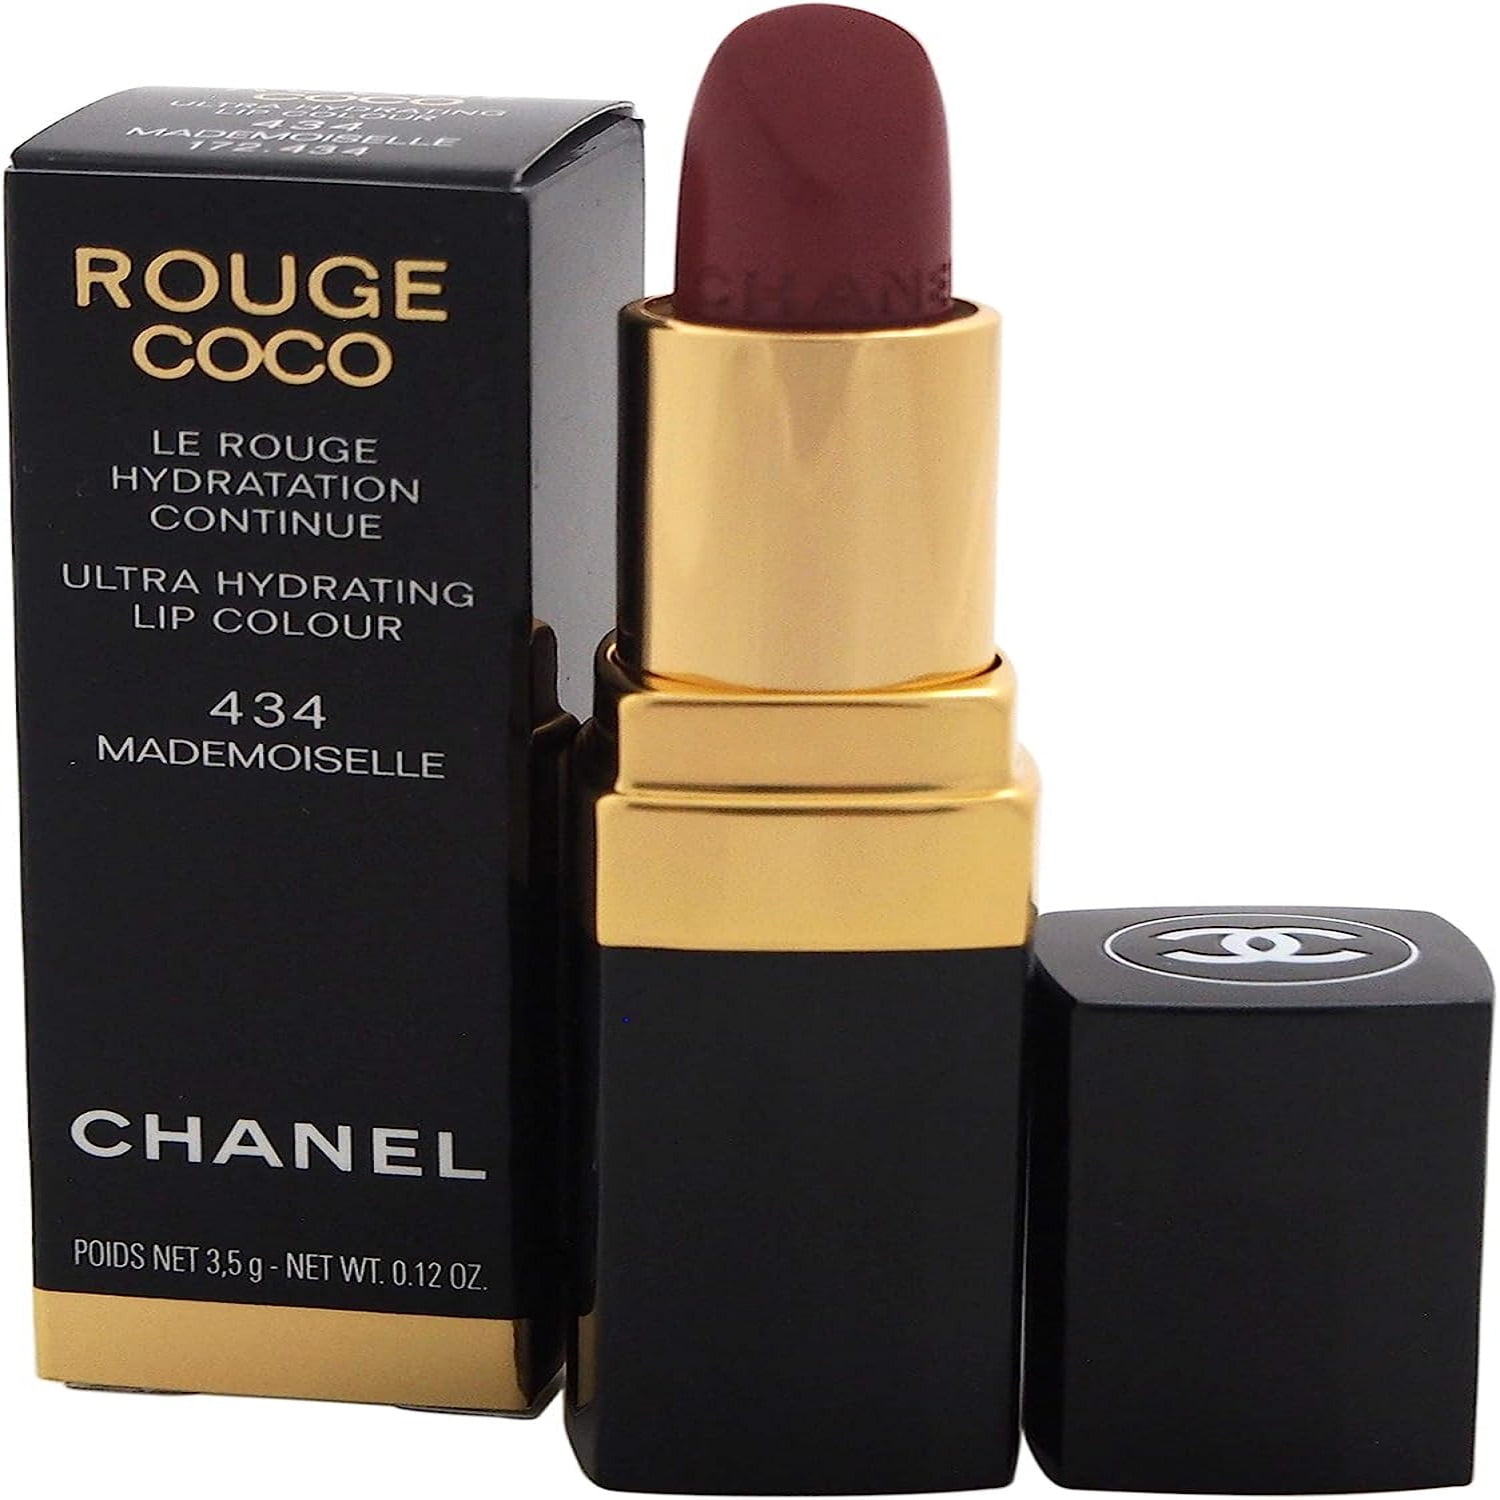 chanel lipstick 106 travel size